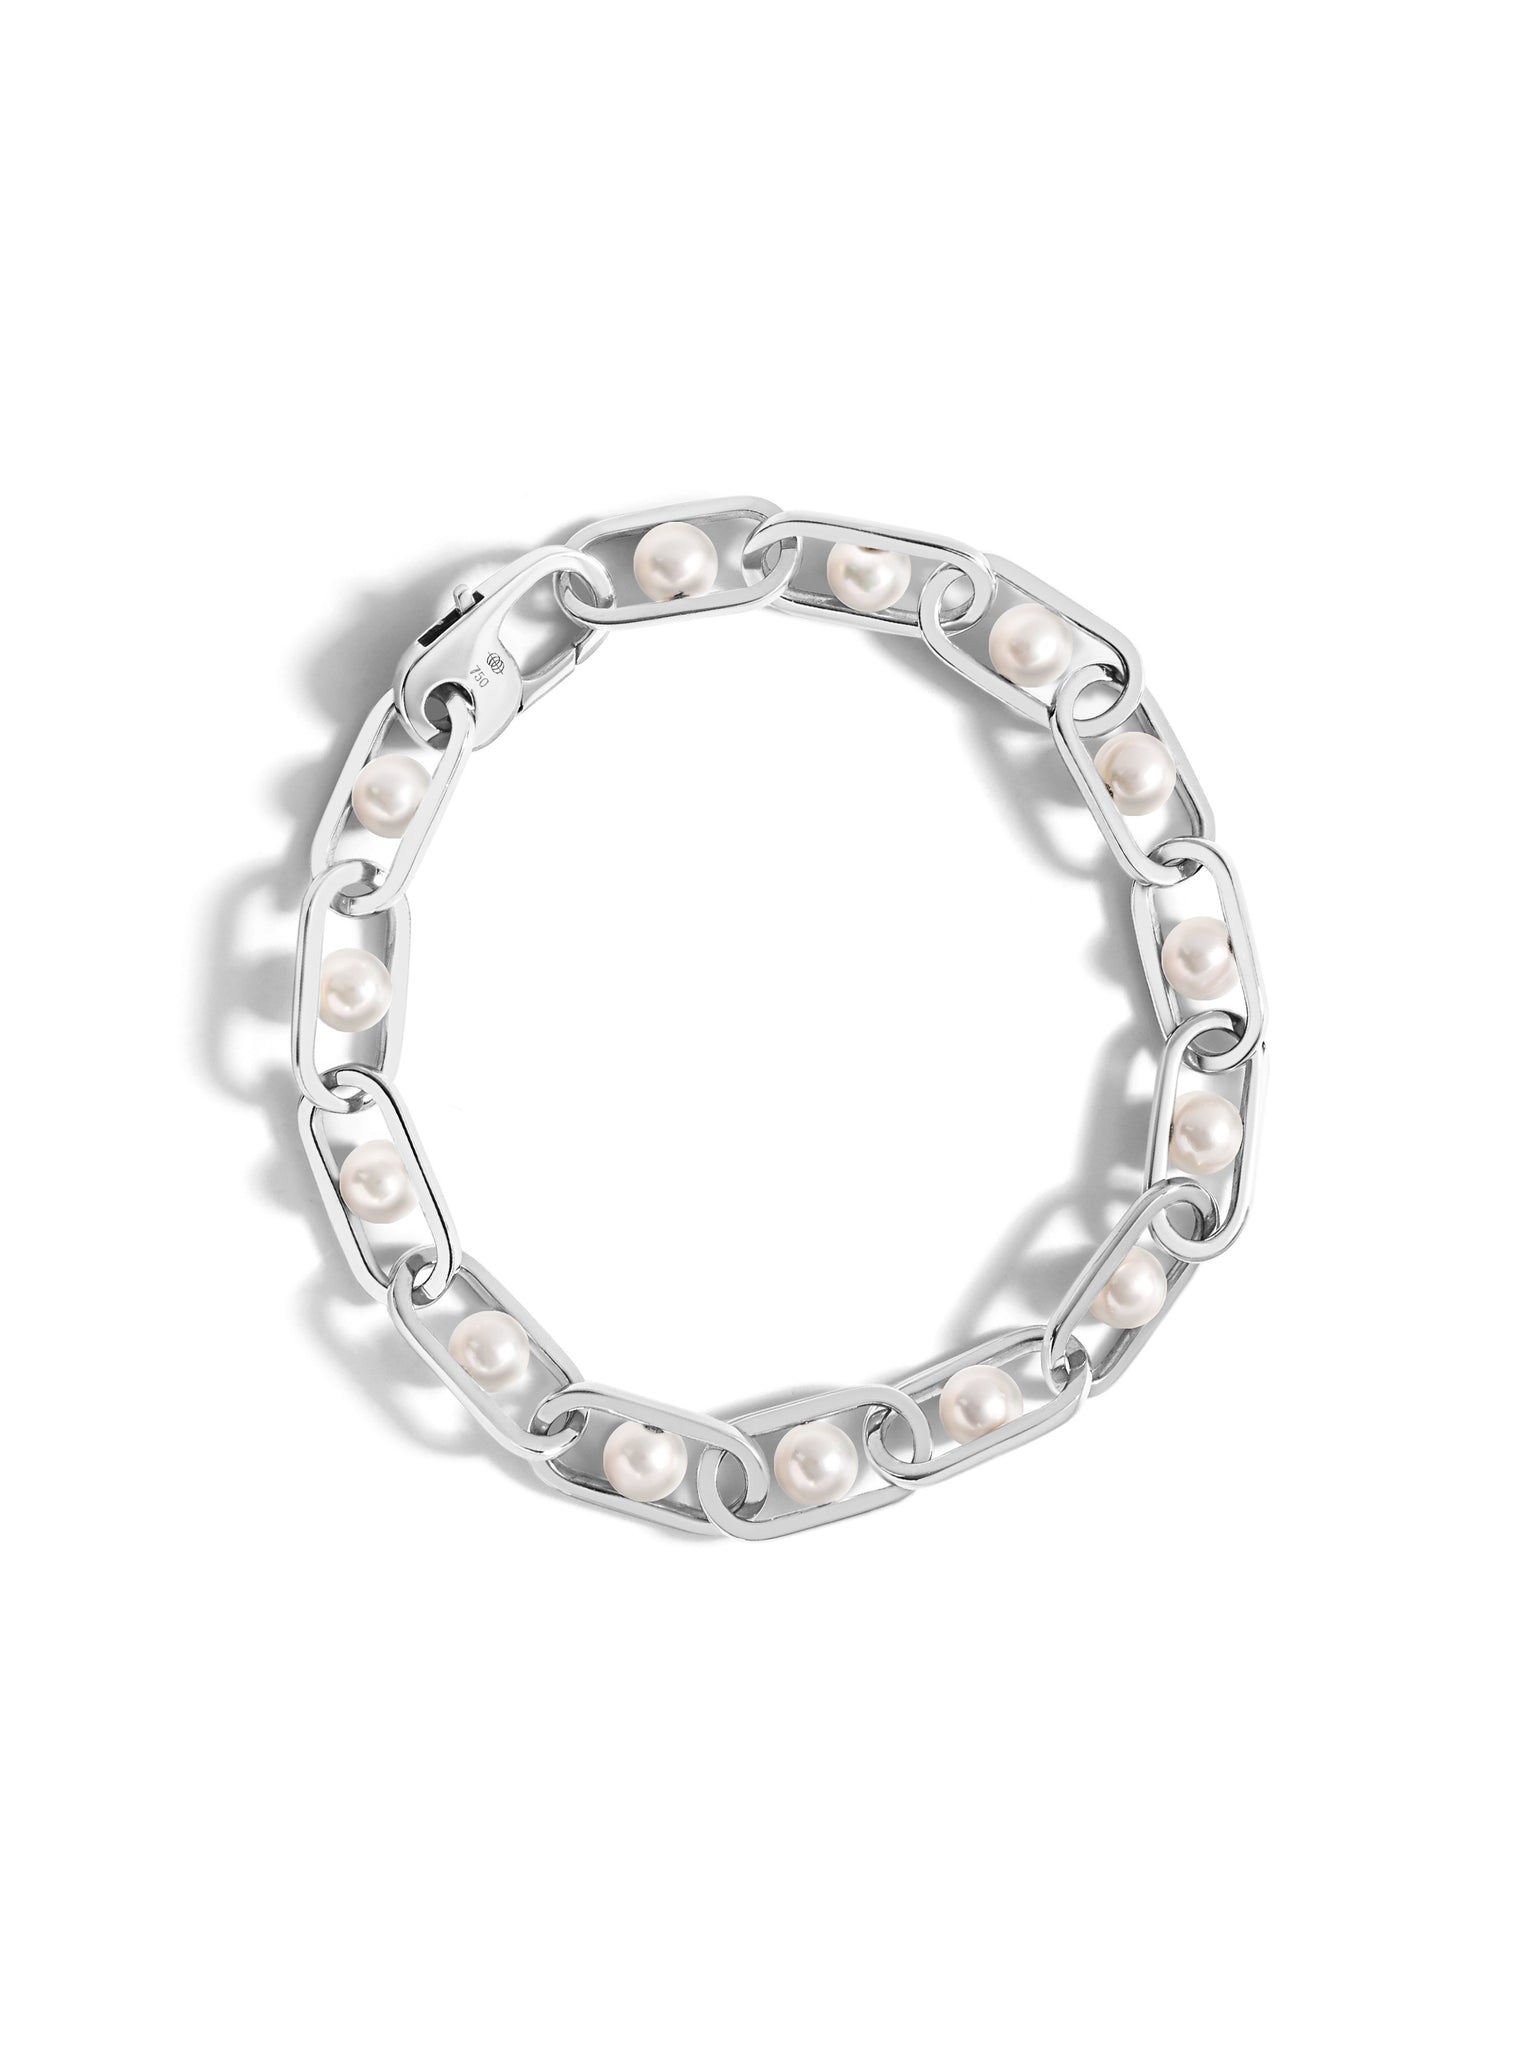 Allegory Pearl Bracelet